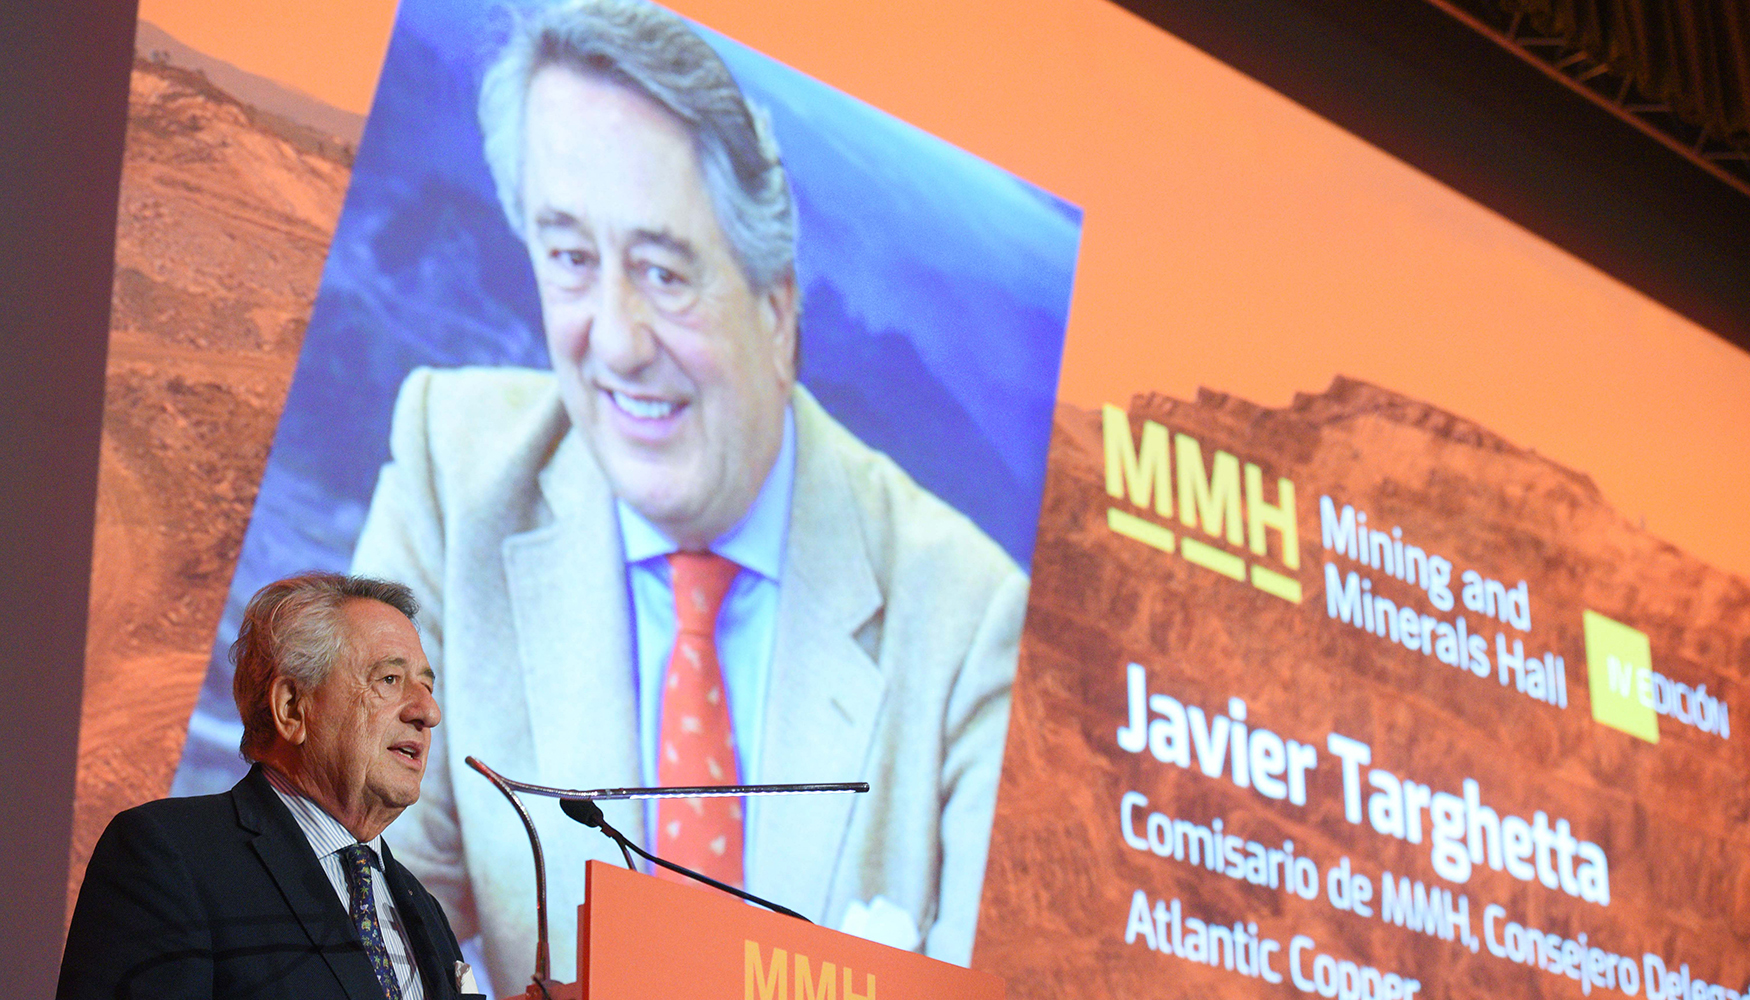 Homenaje a Javier Targhetta, consejero delegado de Atlantic Copper